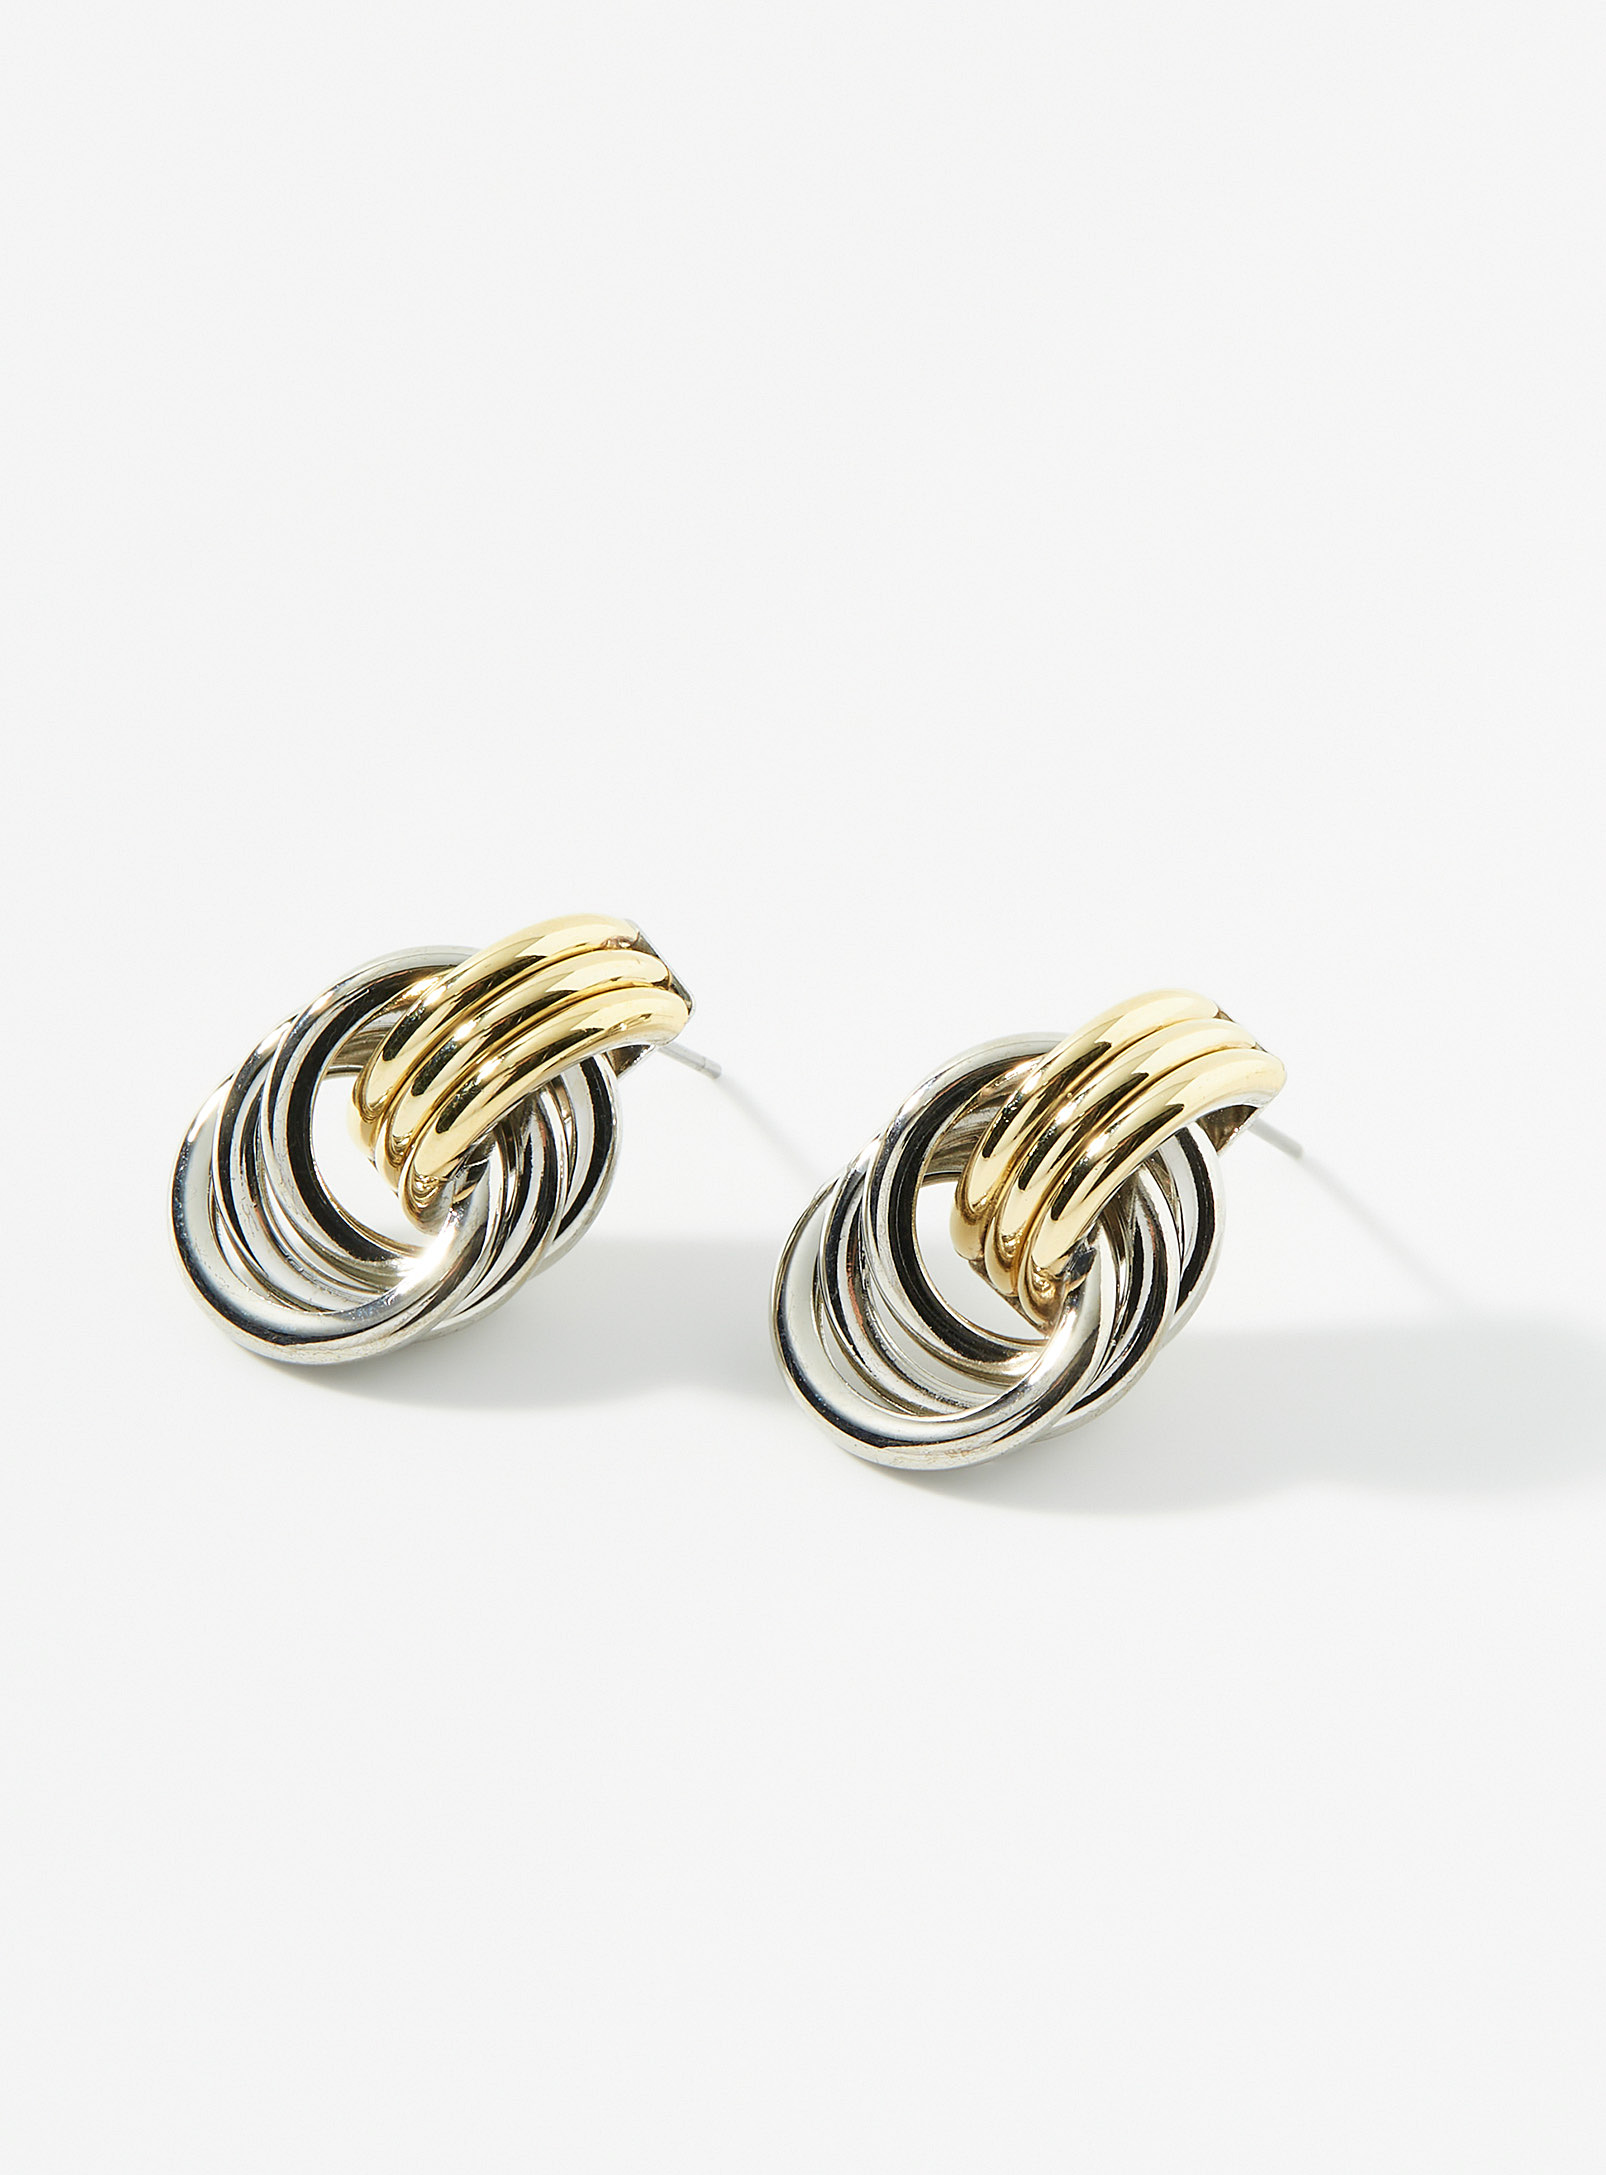 Simons - Women's Interlaced-like two-tone earrings